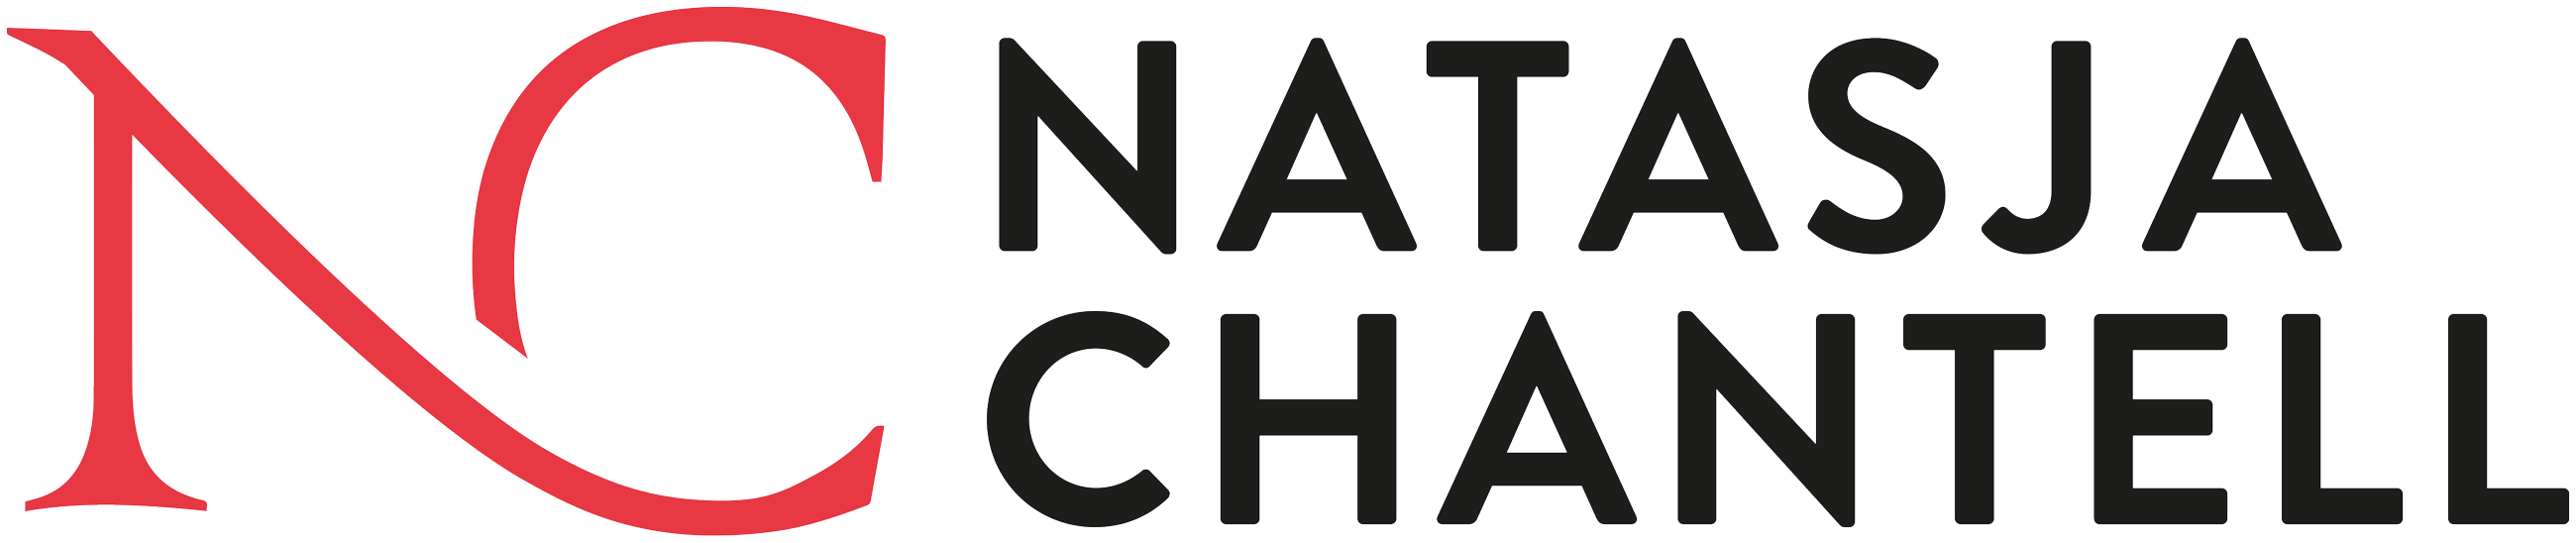 Natasja Chantell (Webside) logo